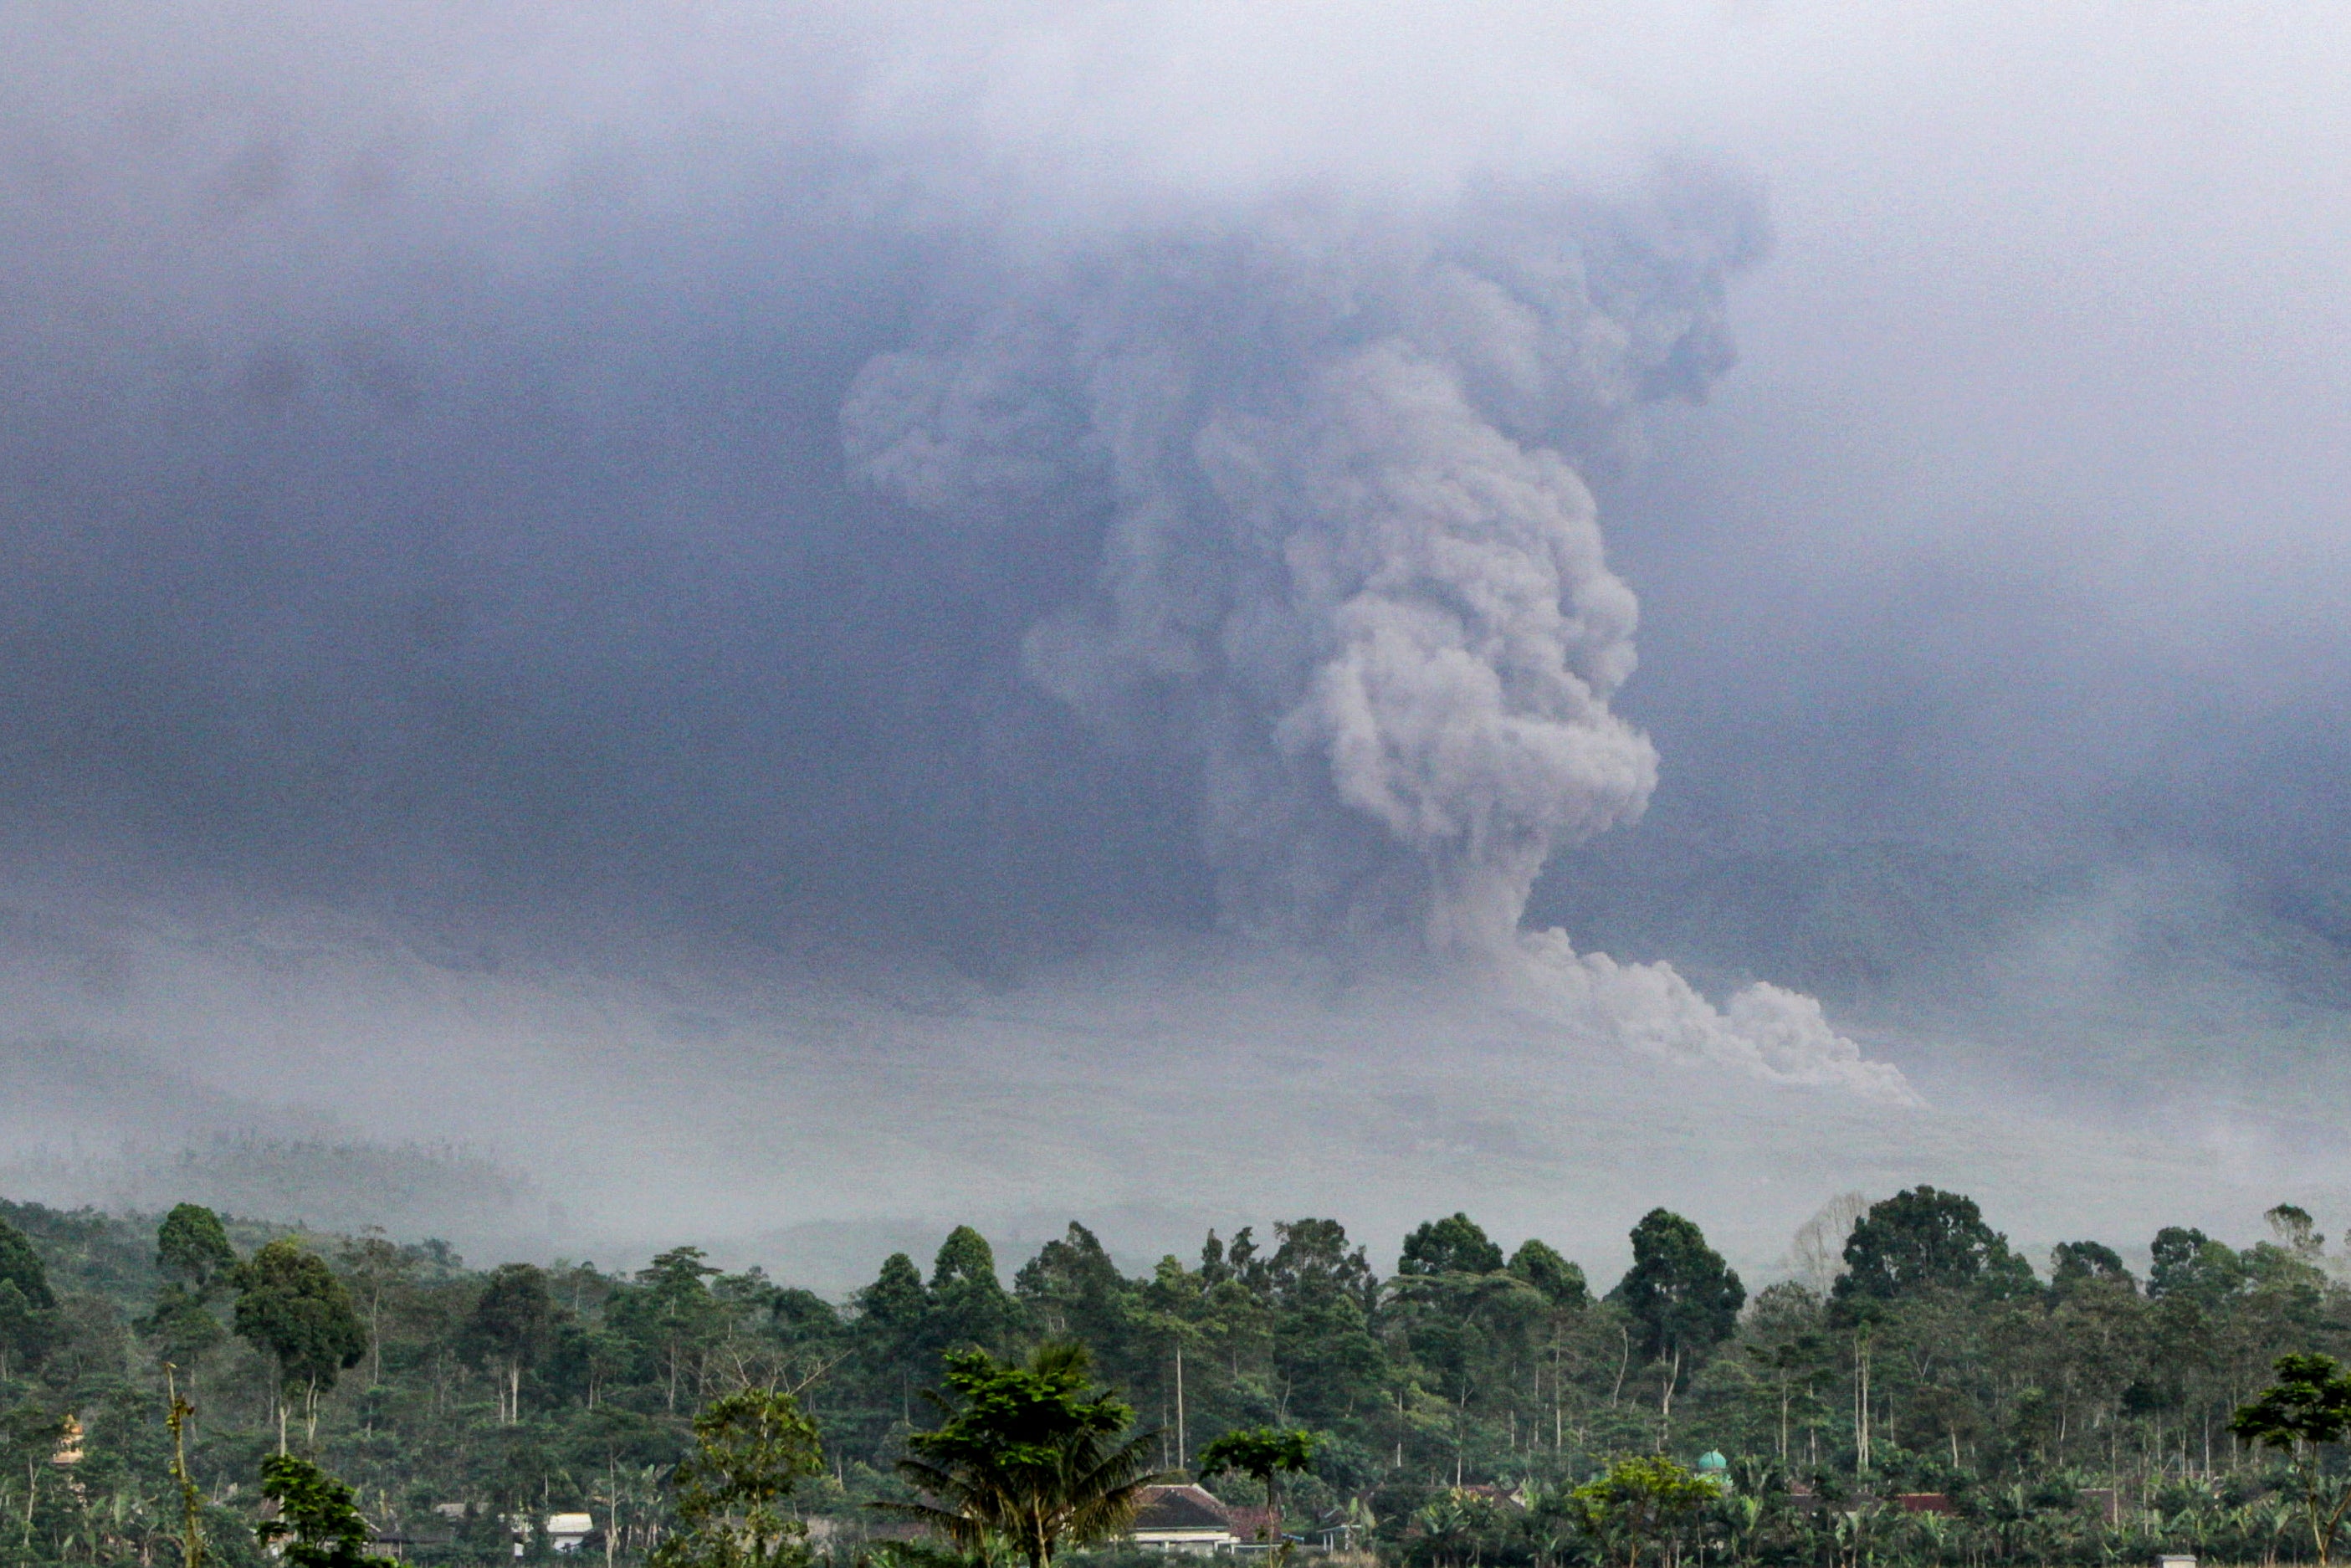 Mount Semeru sends clouds of ash a long way into the air